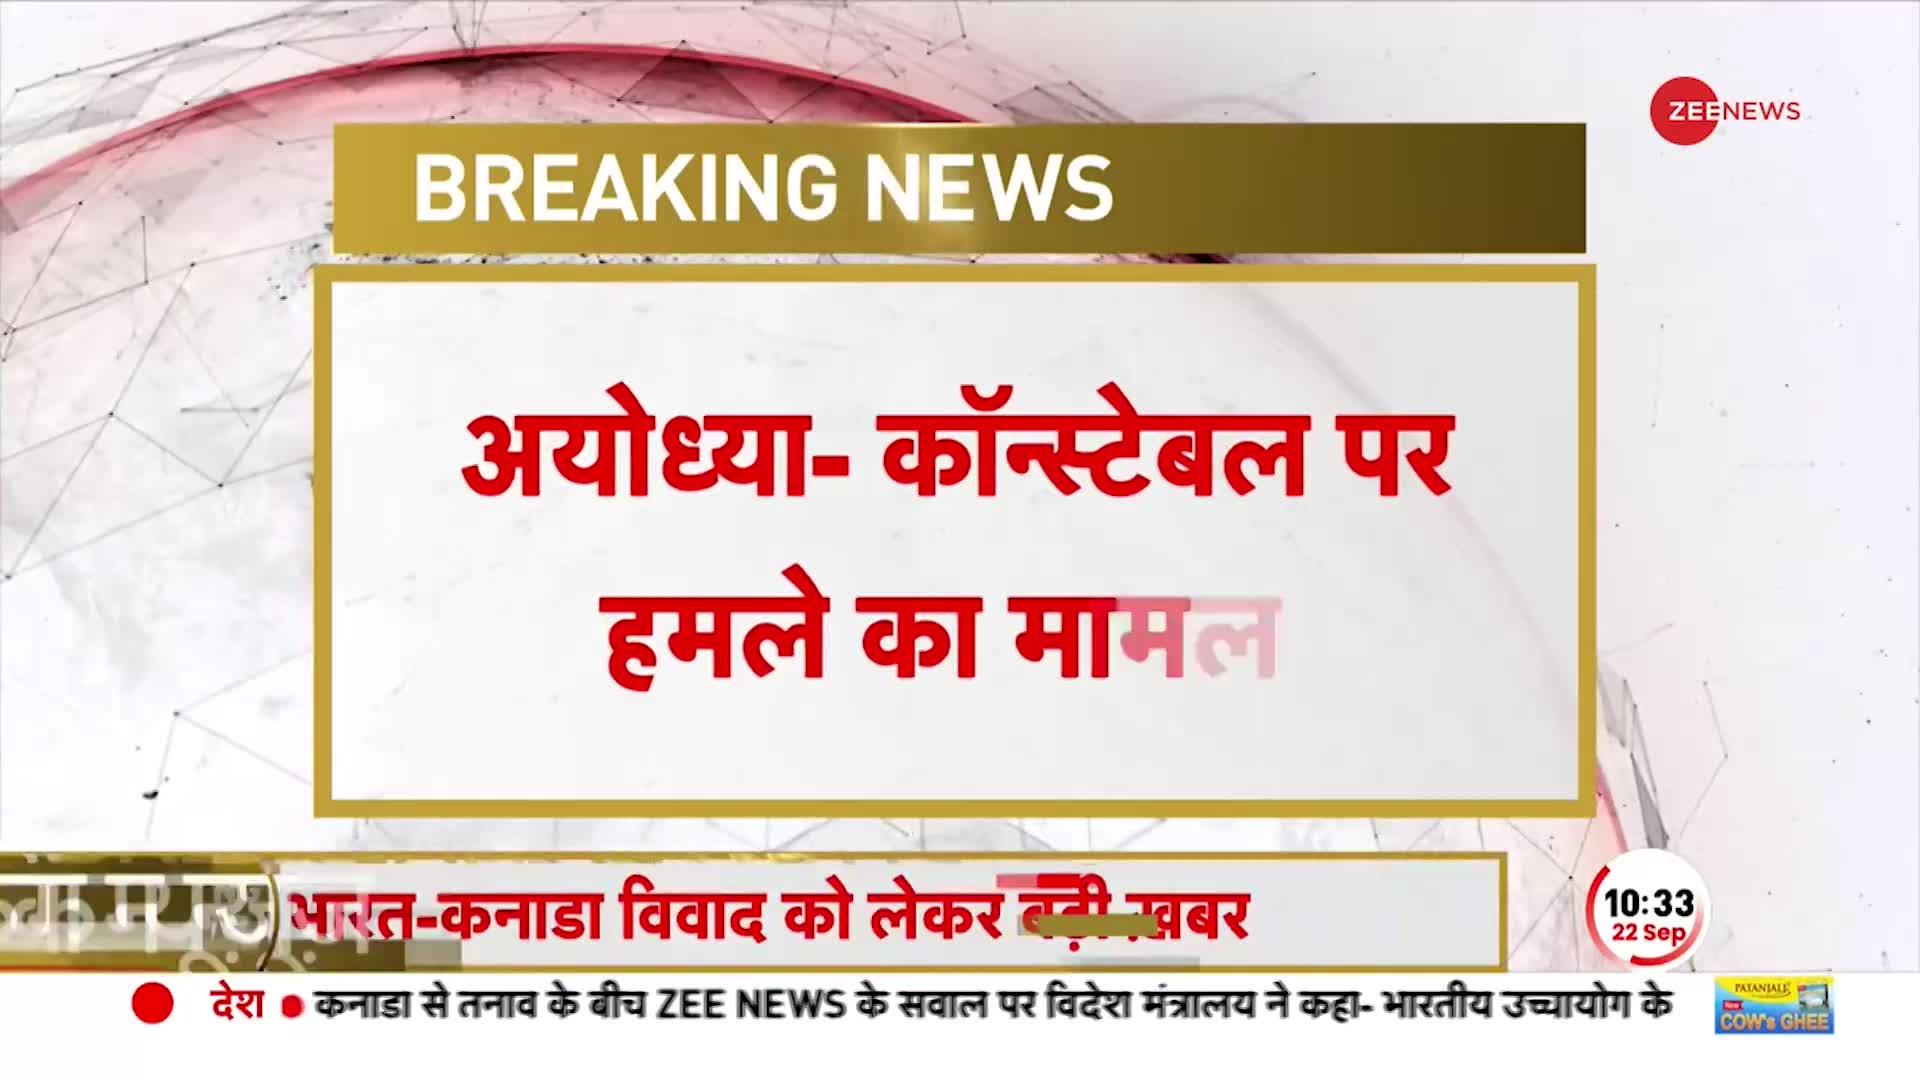 Ayodhya Breaking News: महिला कॉन्स्टेबल पर हमला... आरोपी का 'ENCOUNTER'